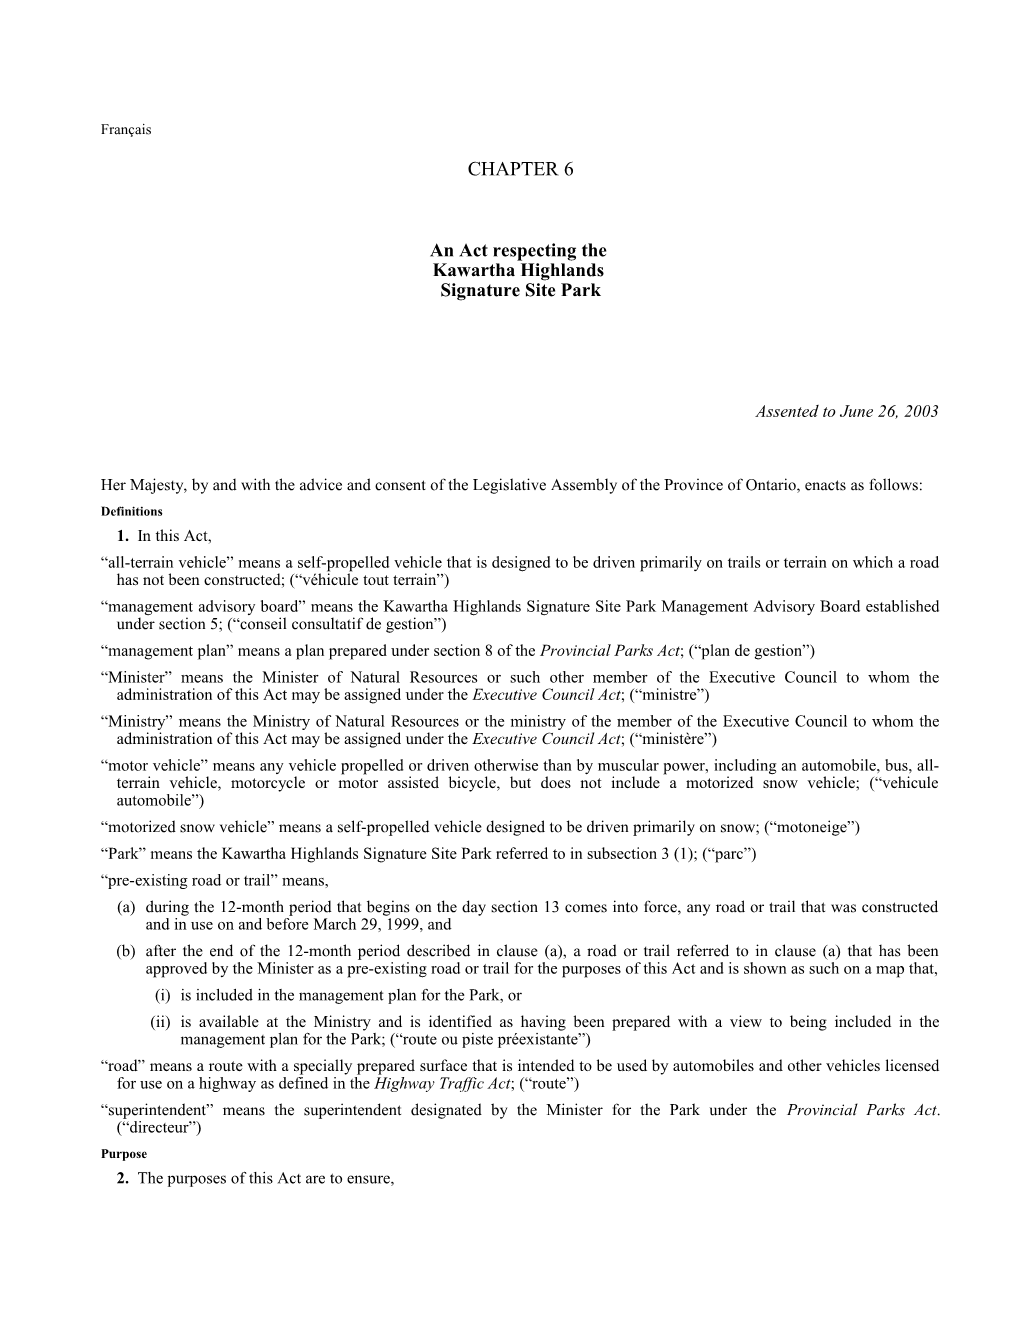 Kawartha Highlands Signature Site Park Act, 2003, S.O. 2003, C. 6 - Bill 100